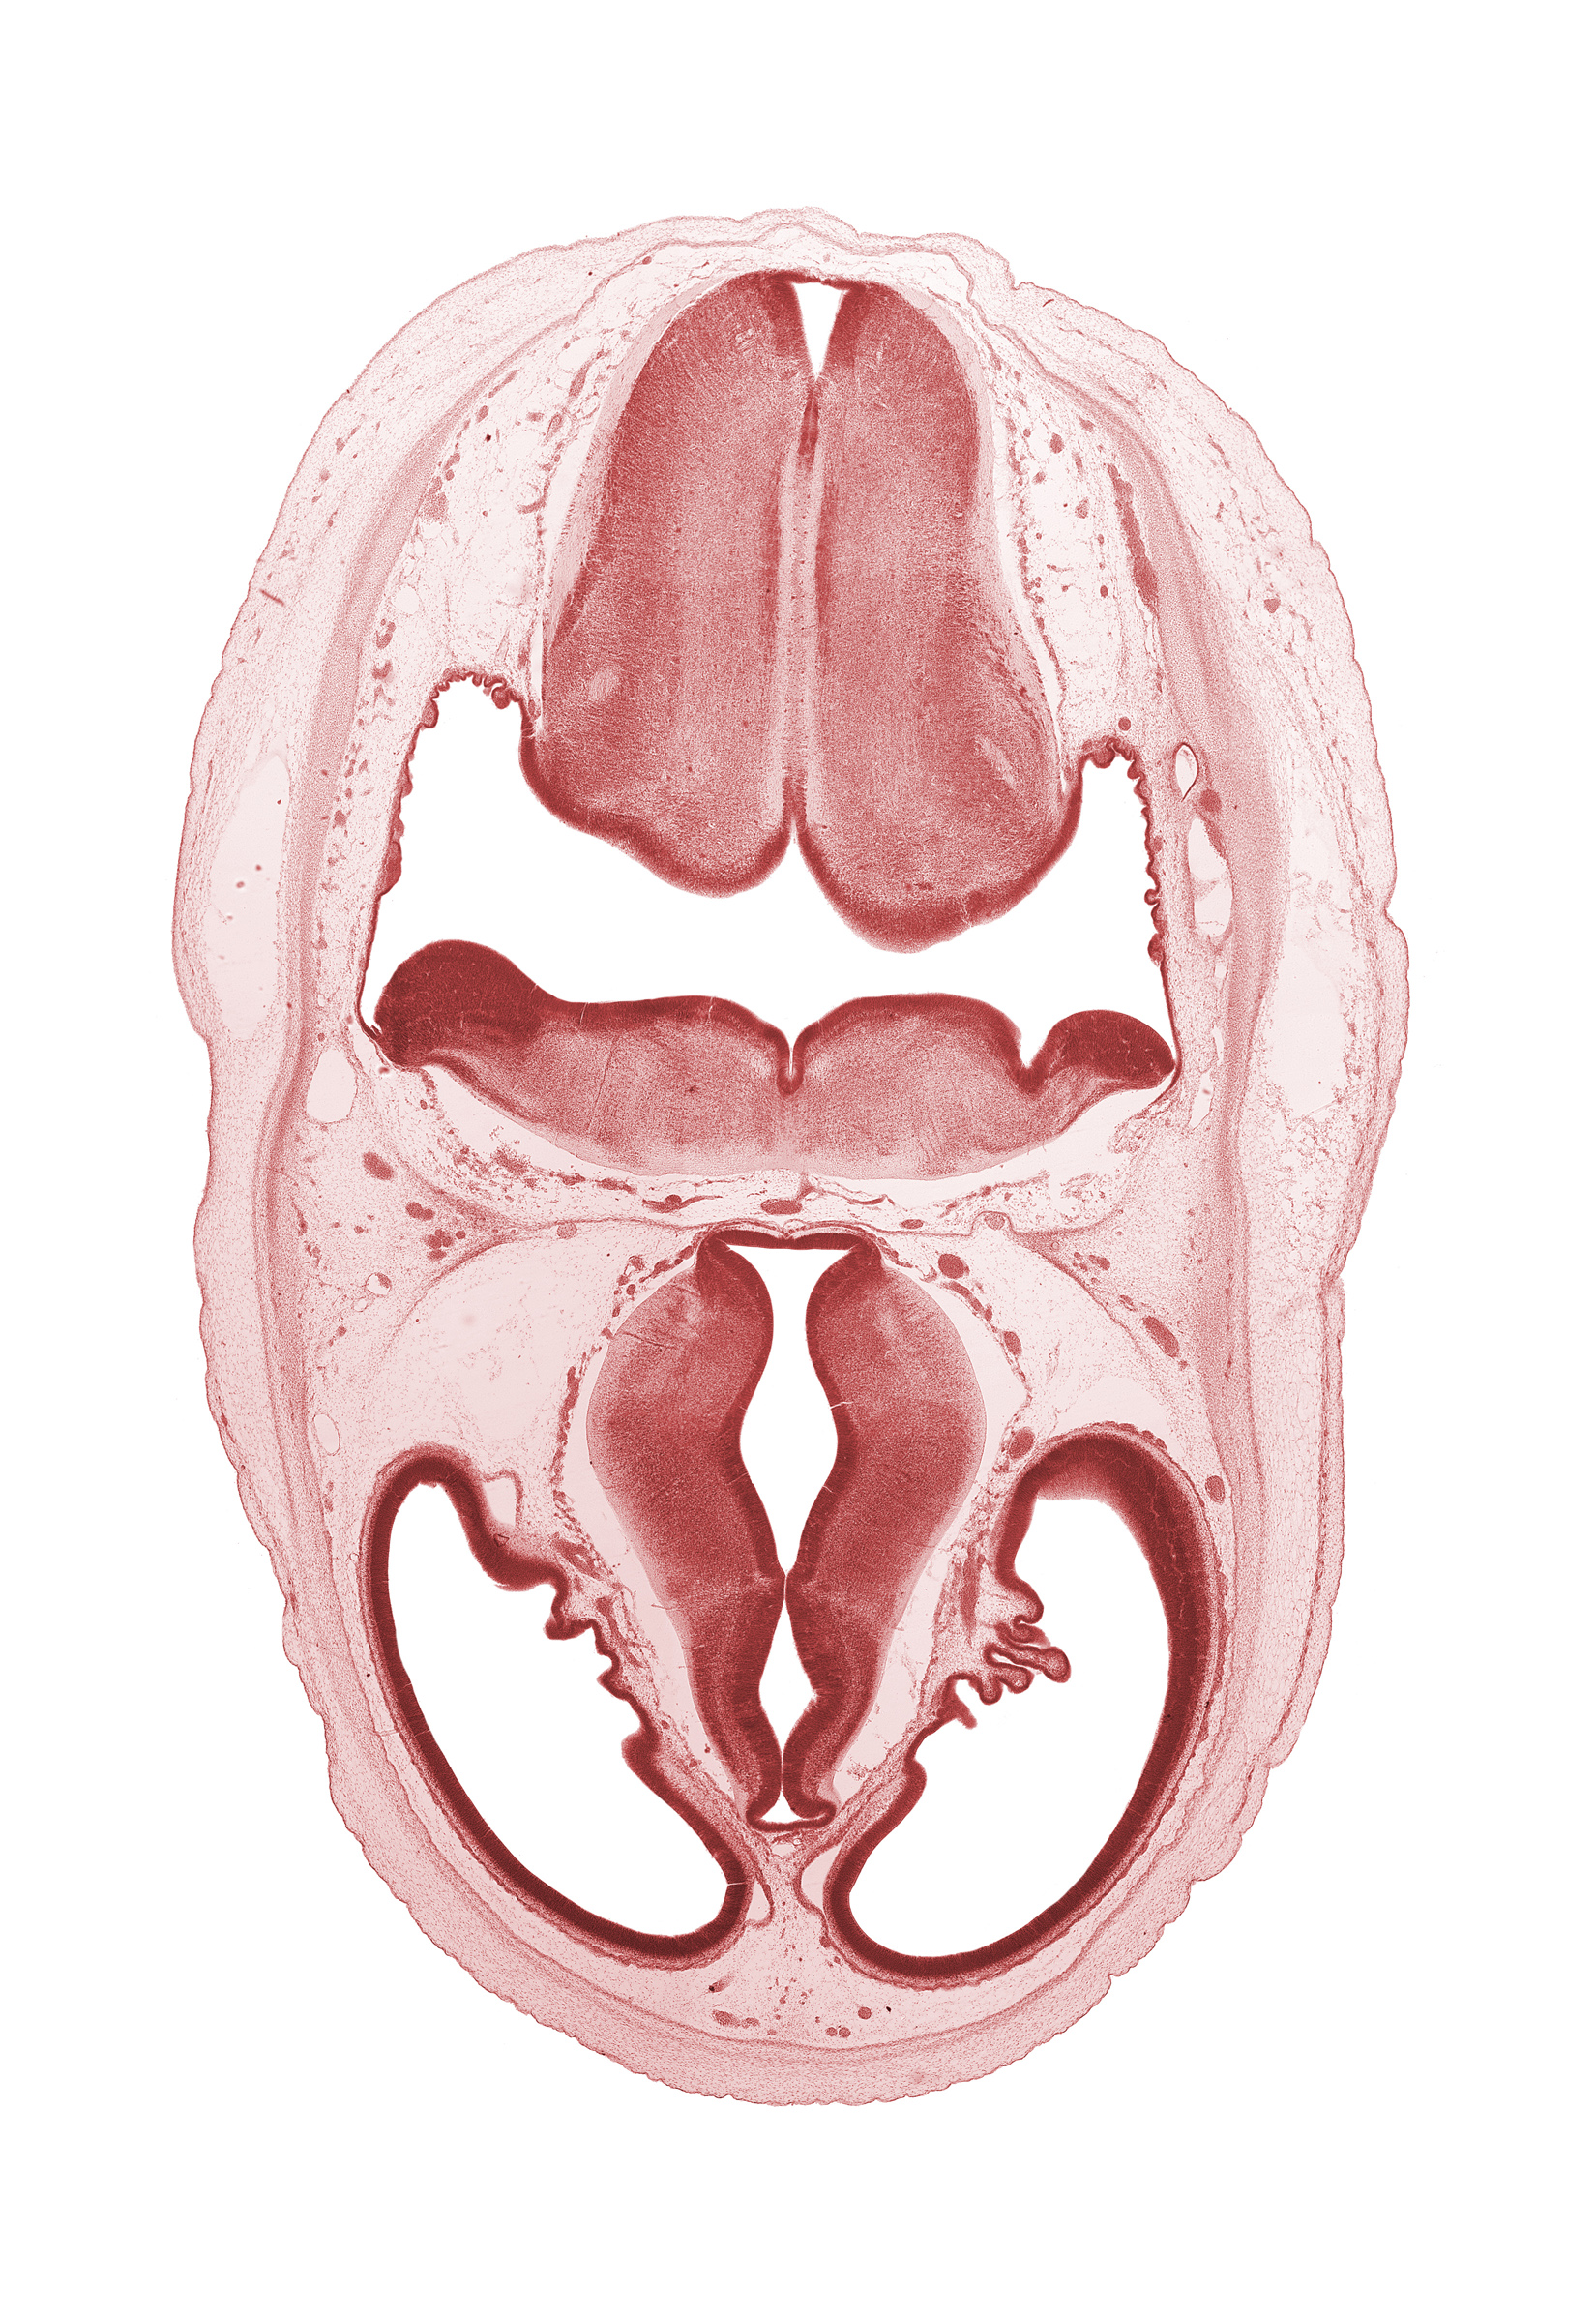 artifact separation(s), basilar artery, choroid plexus, endolymphatic sac, lateral ventricle, myelencephalon (medulla oblongata), obex, oculomotor nerve (CN III), pons region (metencephalon), rhombencoel (fourth ventricle), roof of rhombencoel (fourth ventricle), sensory decussation, trochlear nerve (CN IV), zona limitans intrathalamica